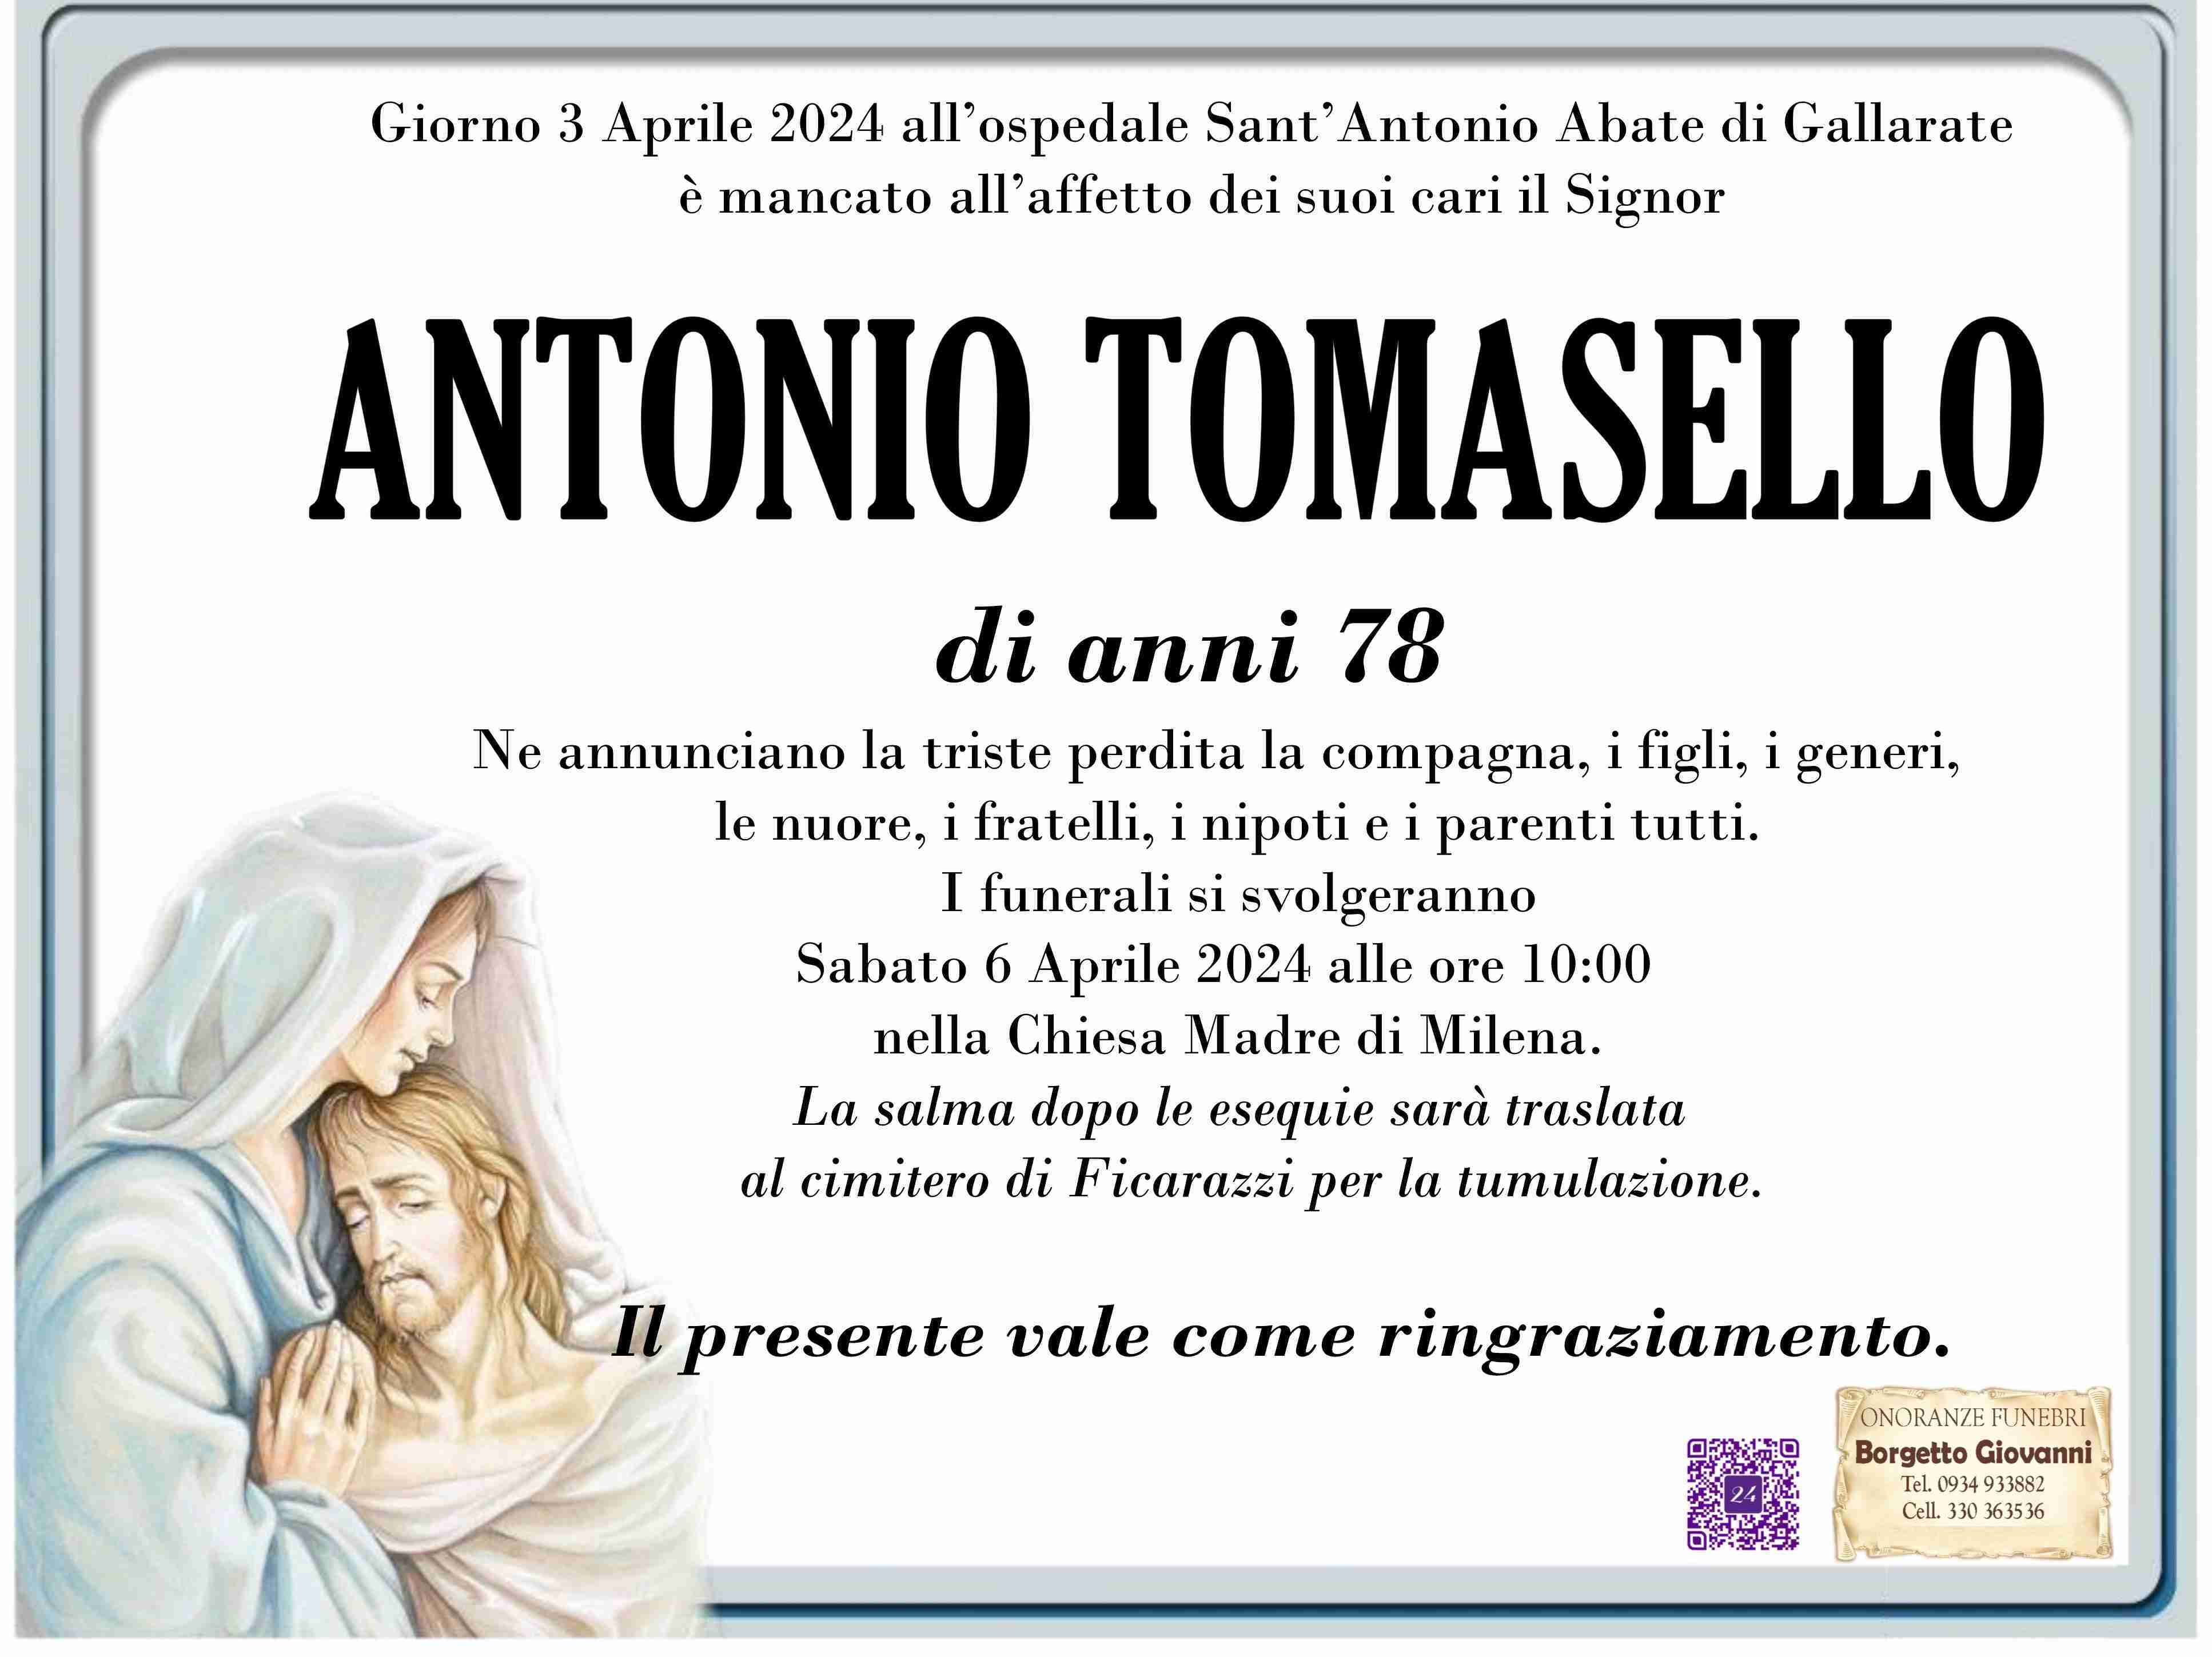 Antonio Tomasello